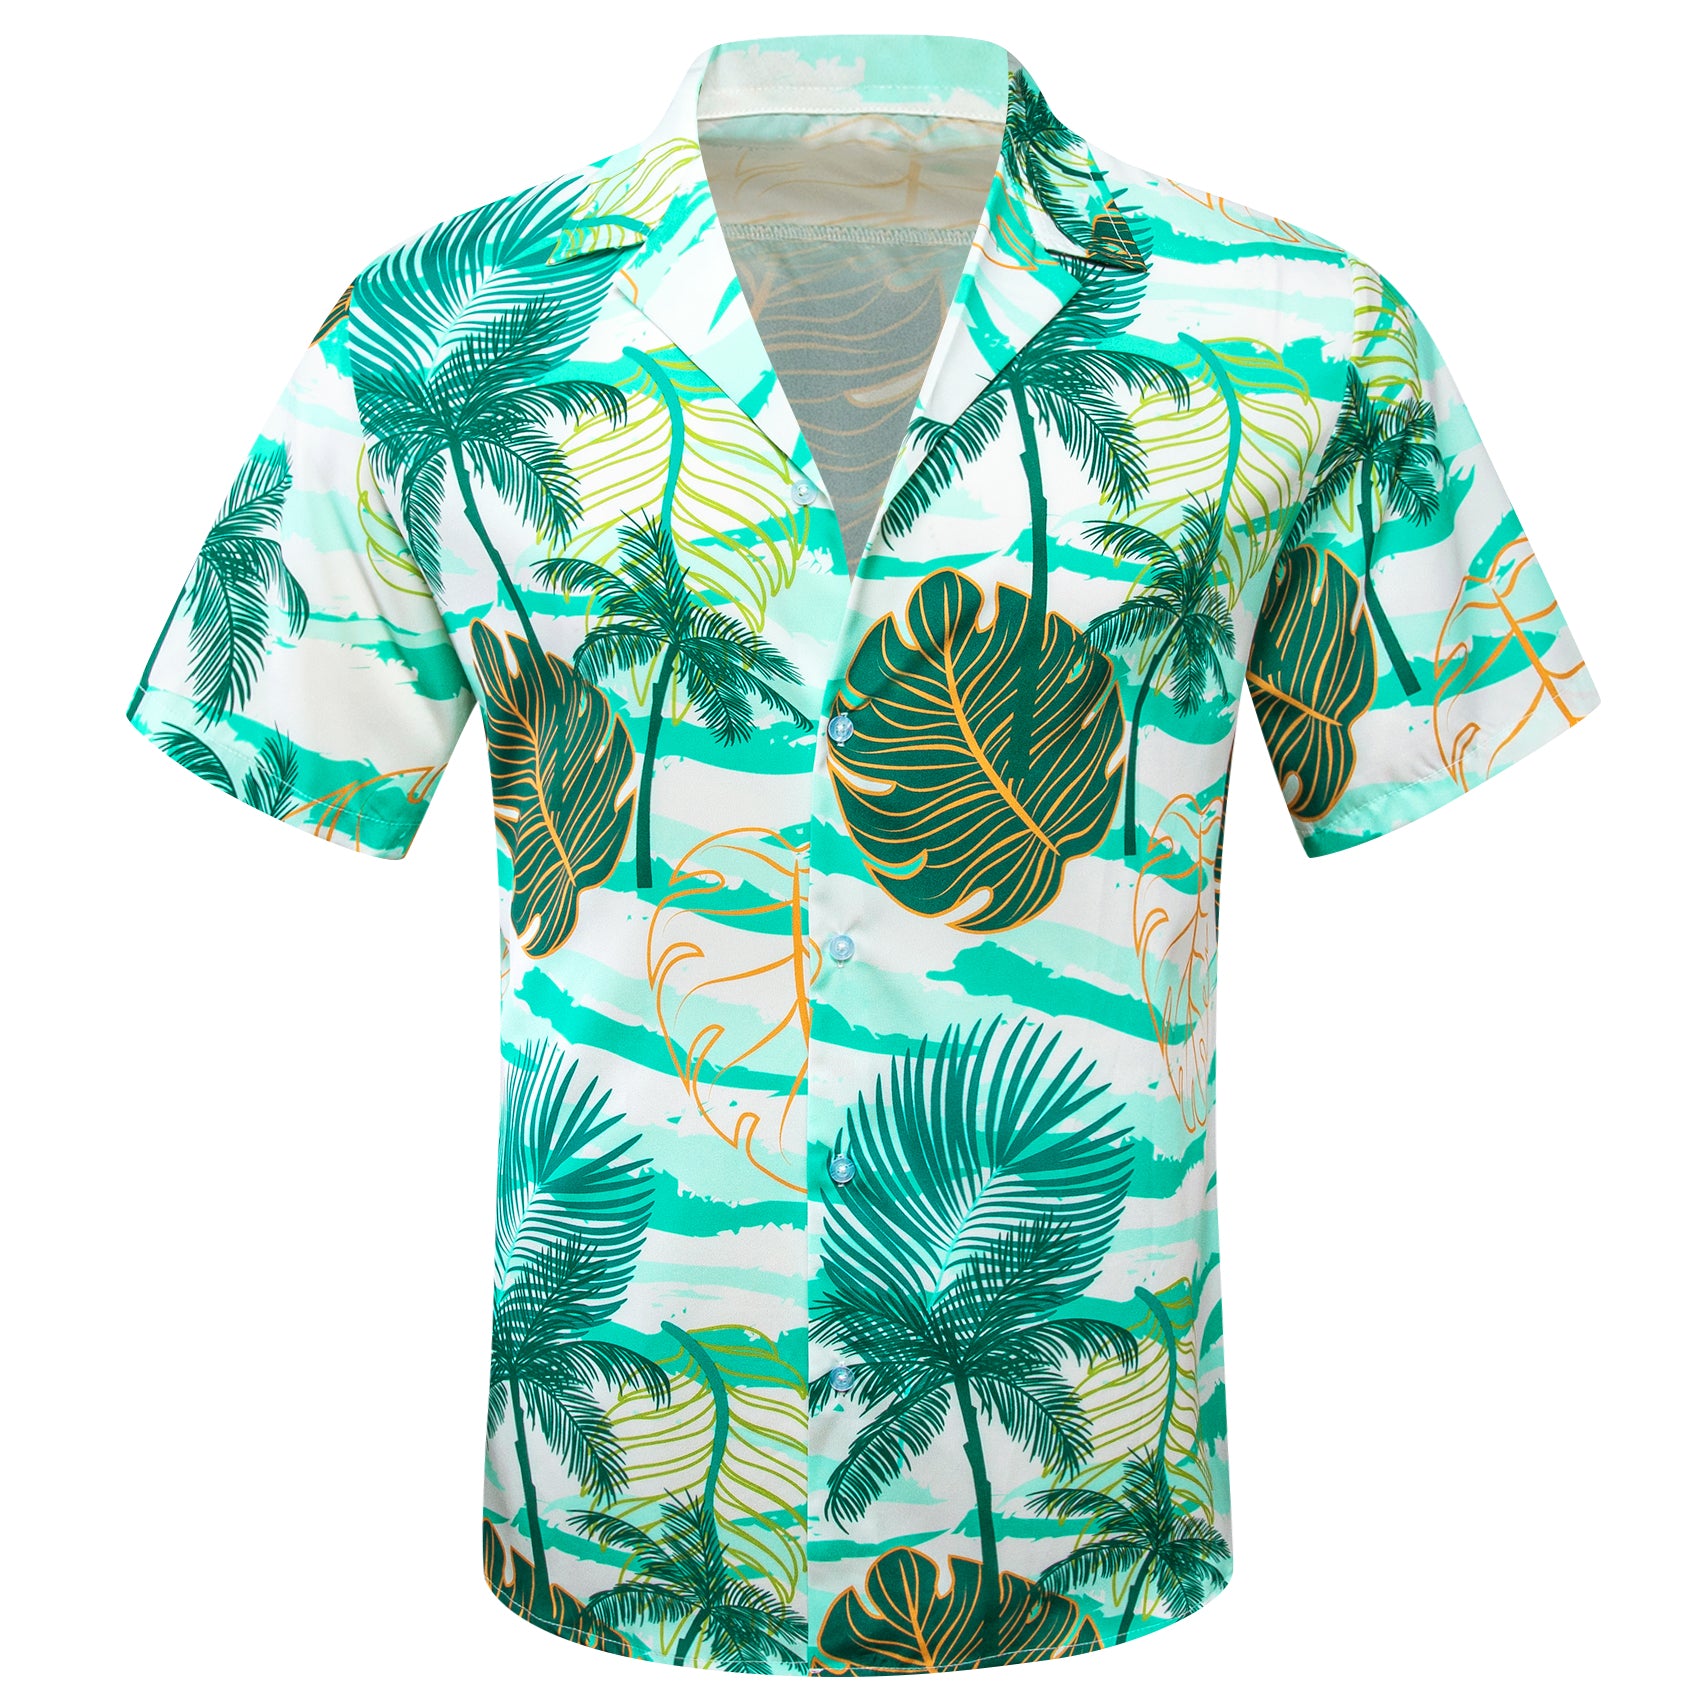 Mens Green Floral Pattern Short Sleeves Summer Hawaii Shirt green shirt.